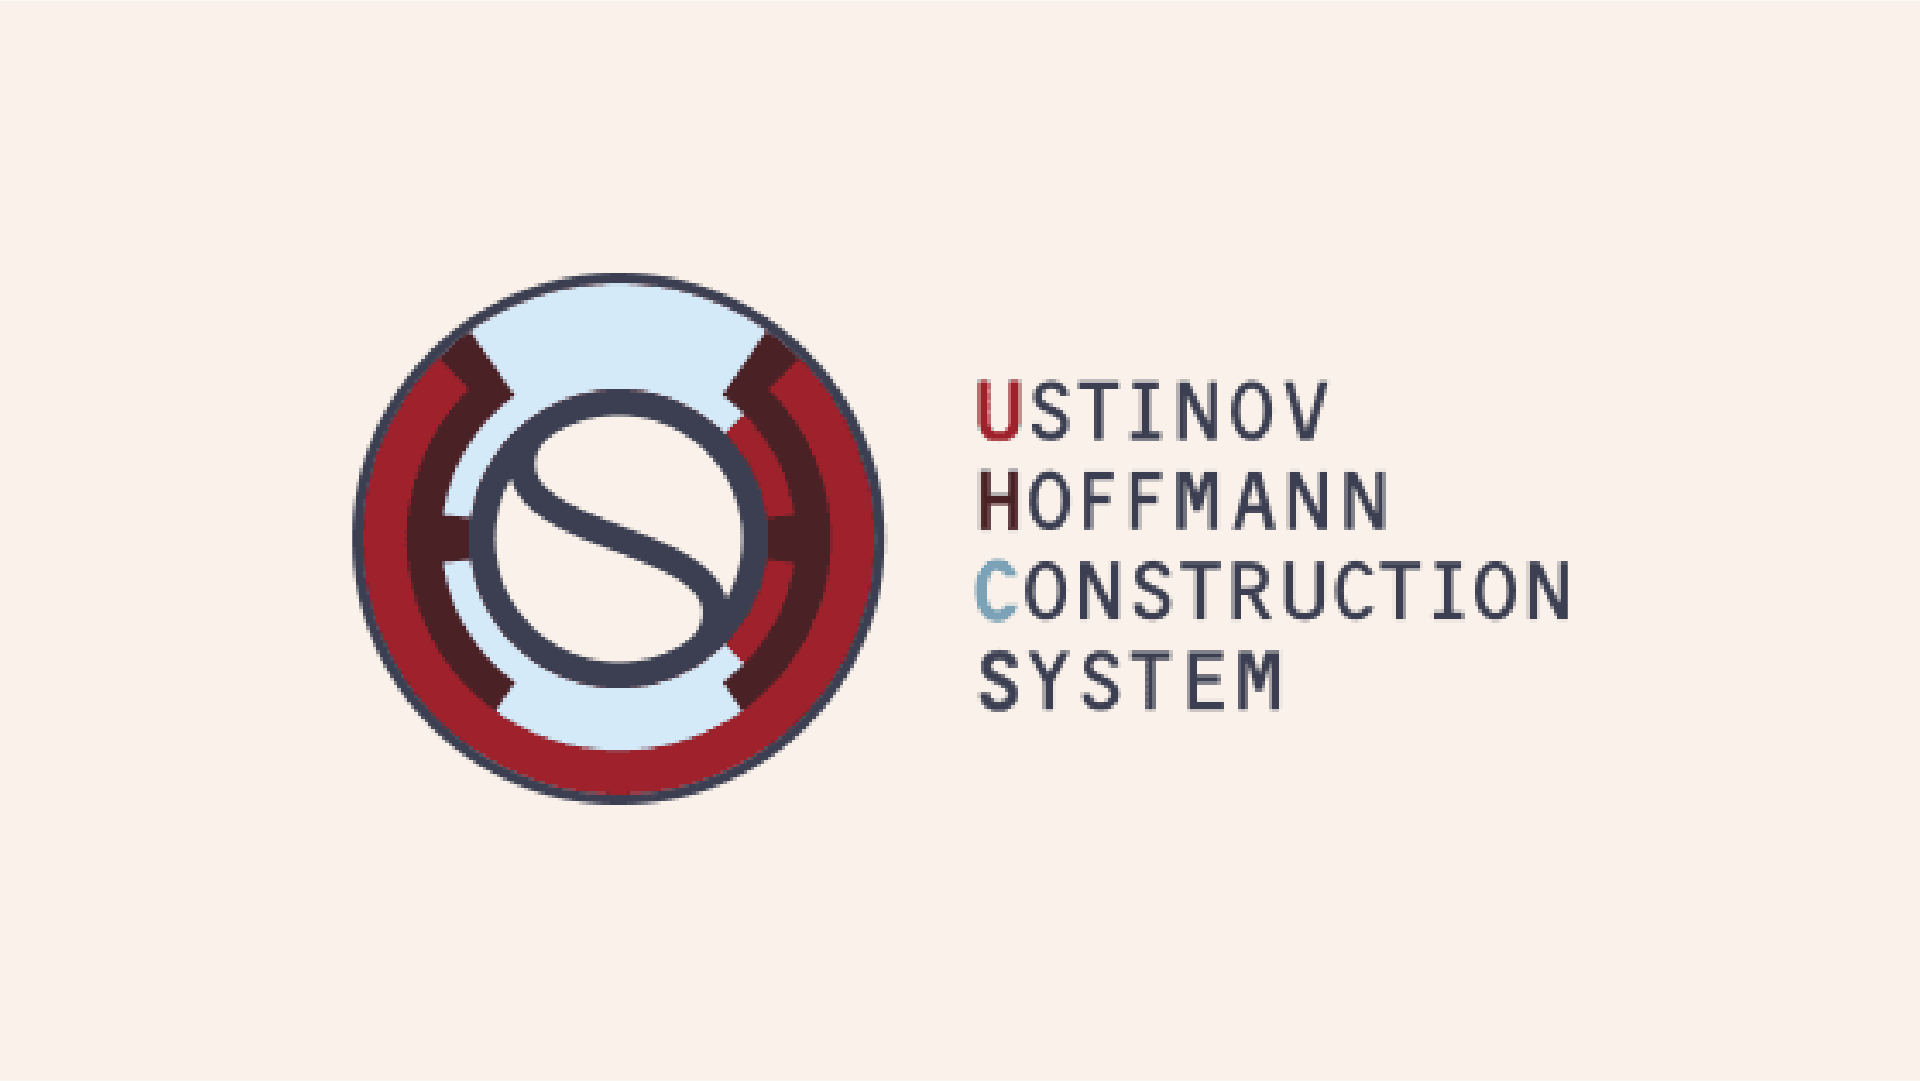 Ustinov Hoffmann Construction System